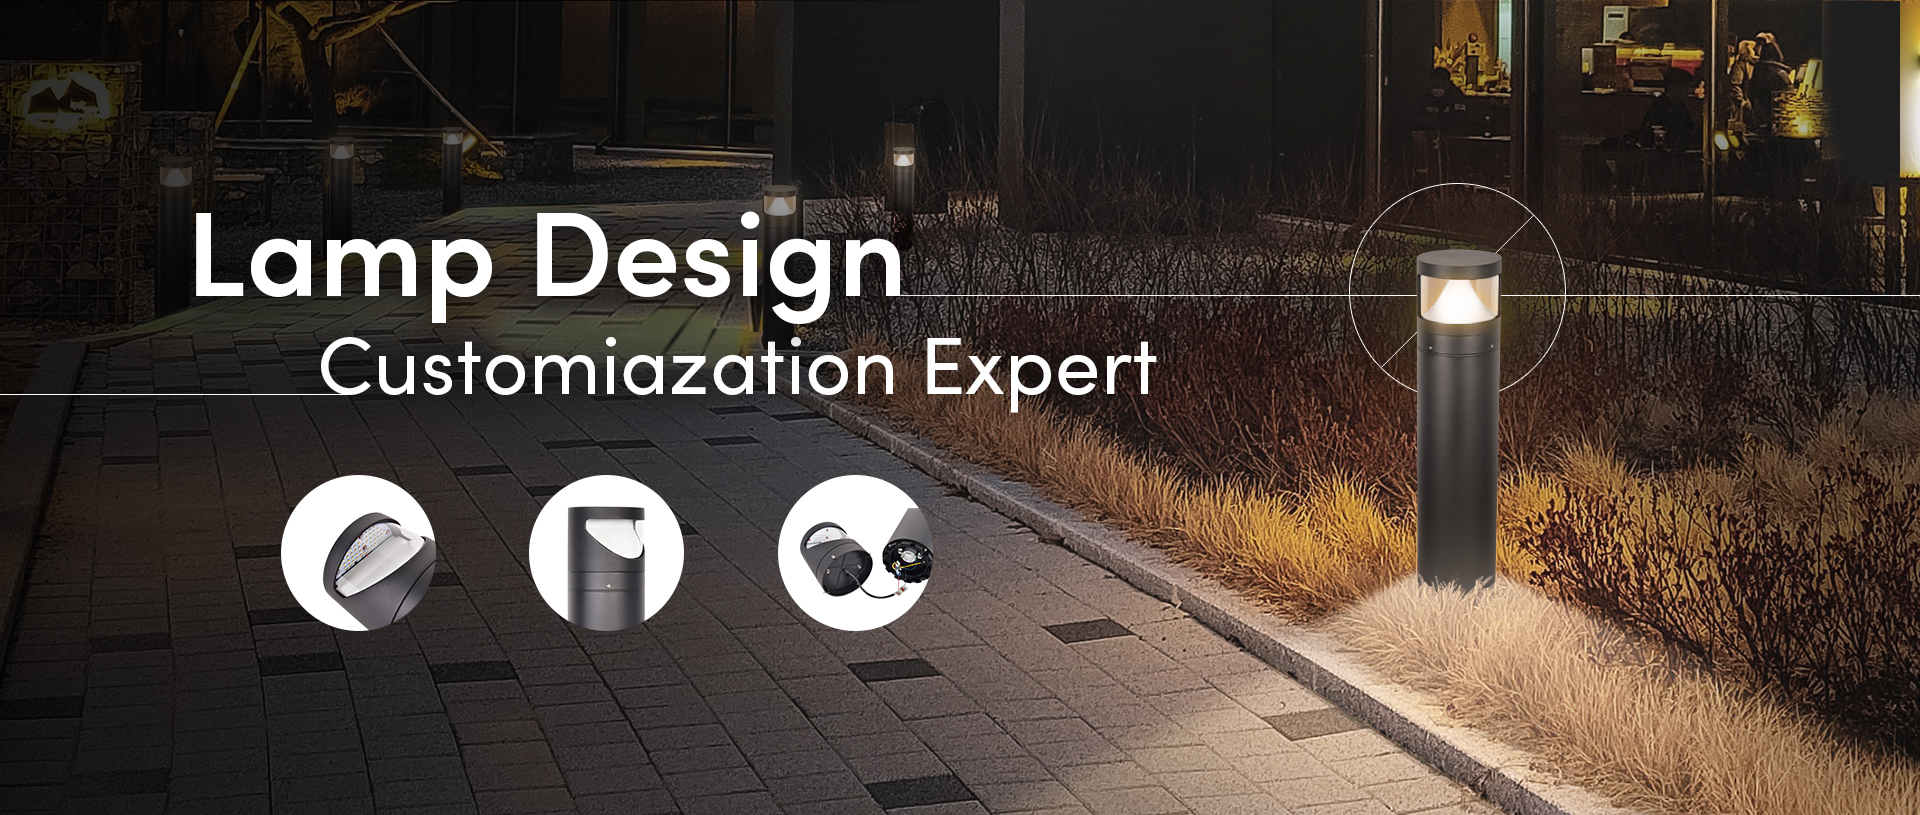 Lamp Design Customiazation Expert